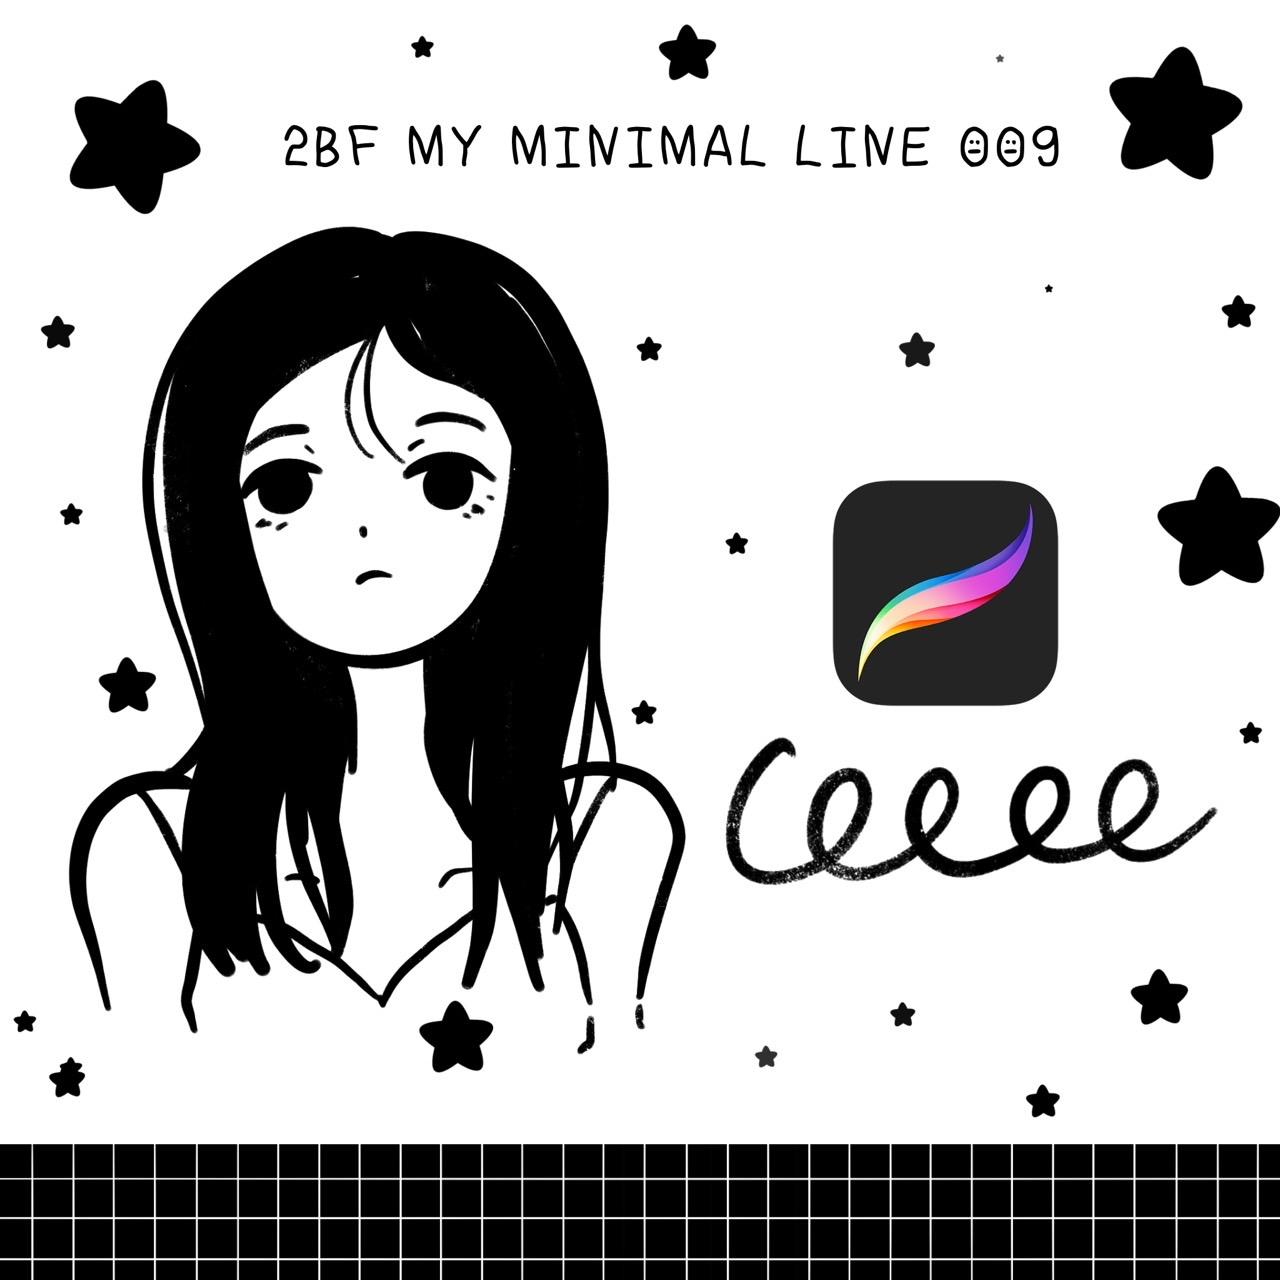 2BF MY MINIMAL LINE 009